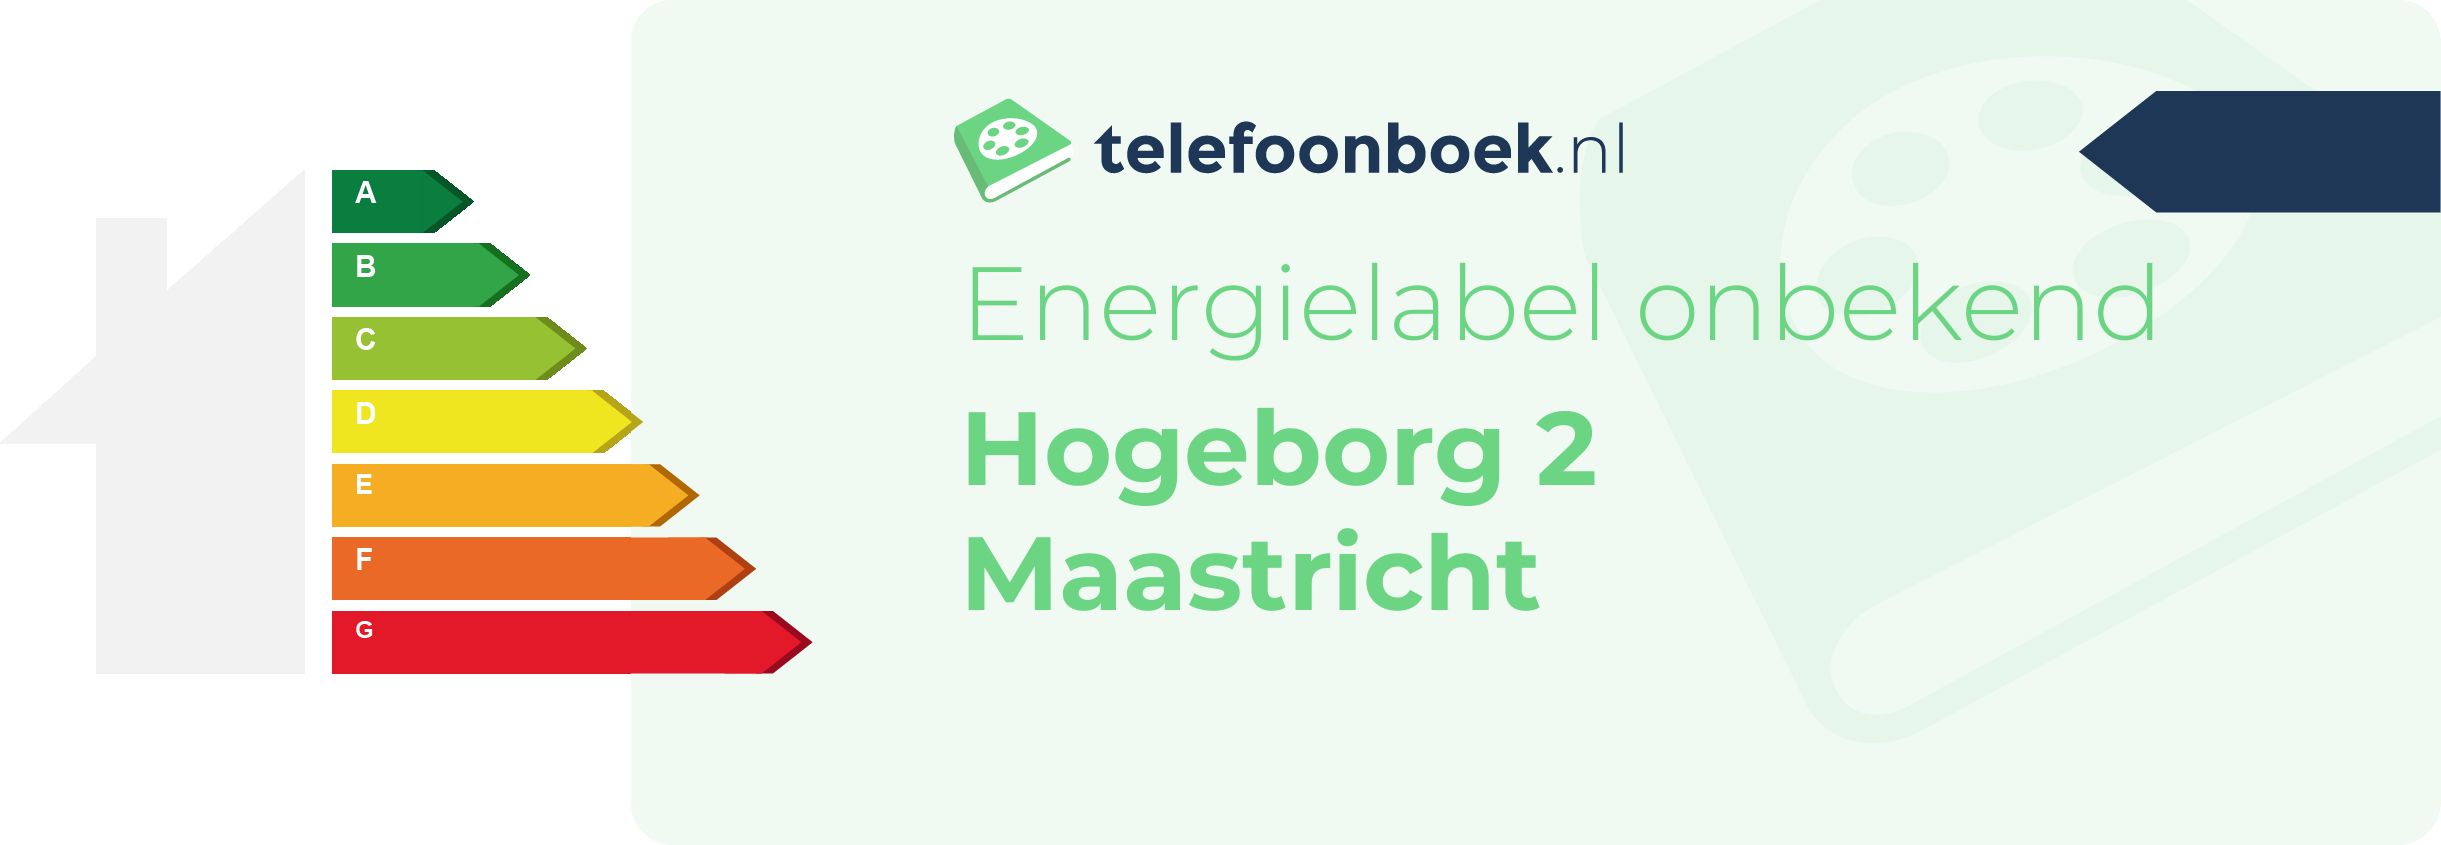 Energielabel Hogeborg 2 Maastricht